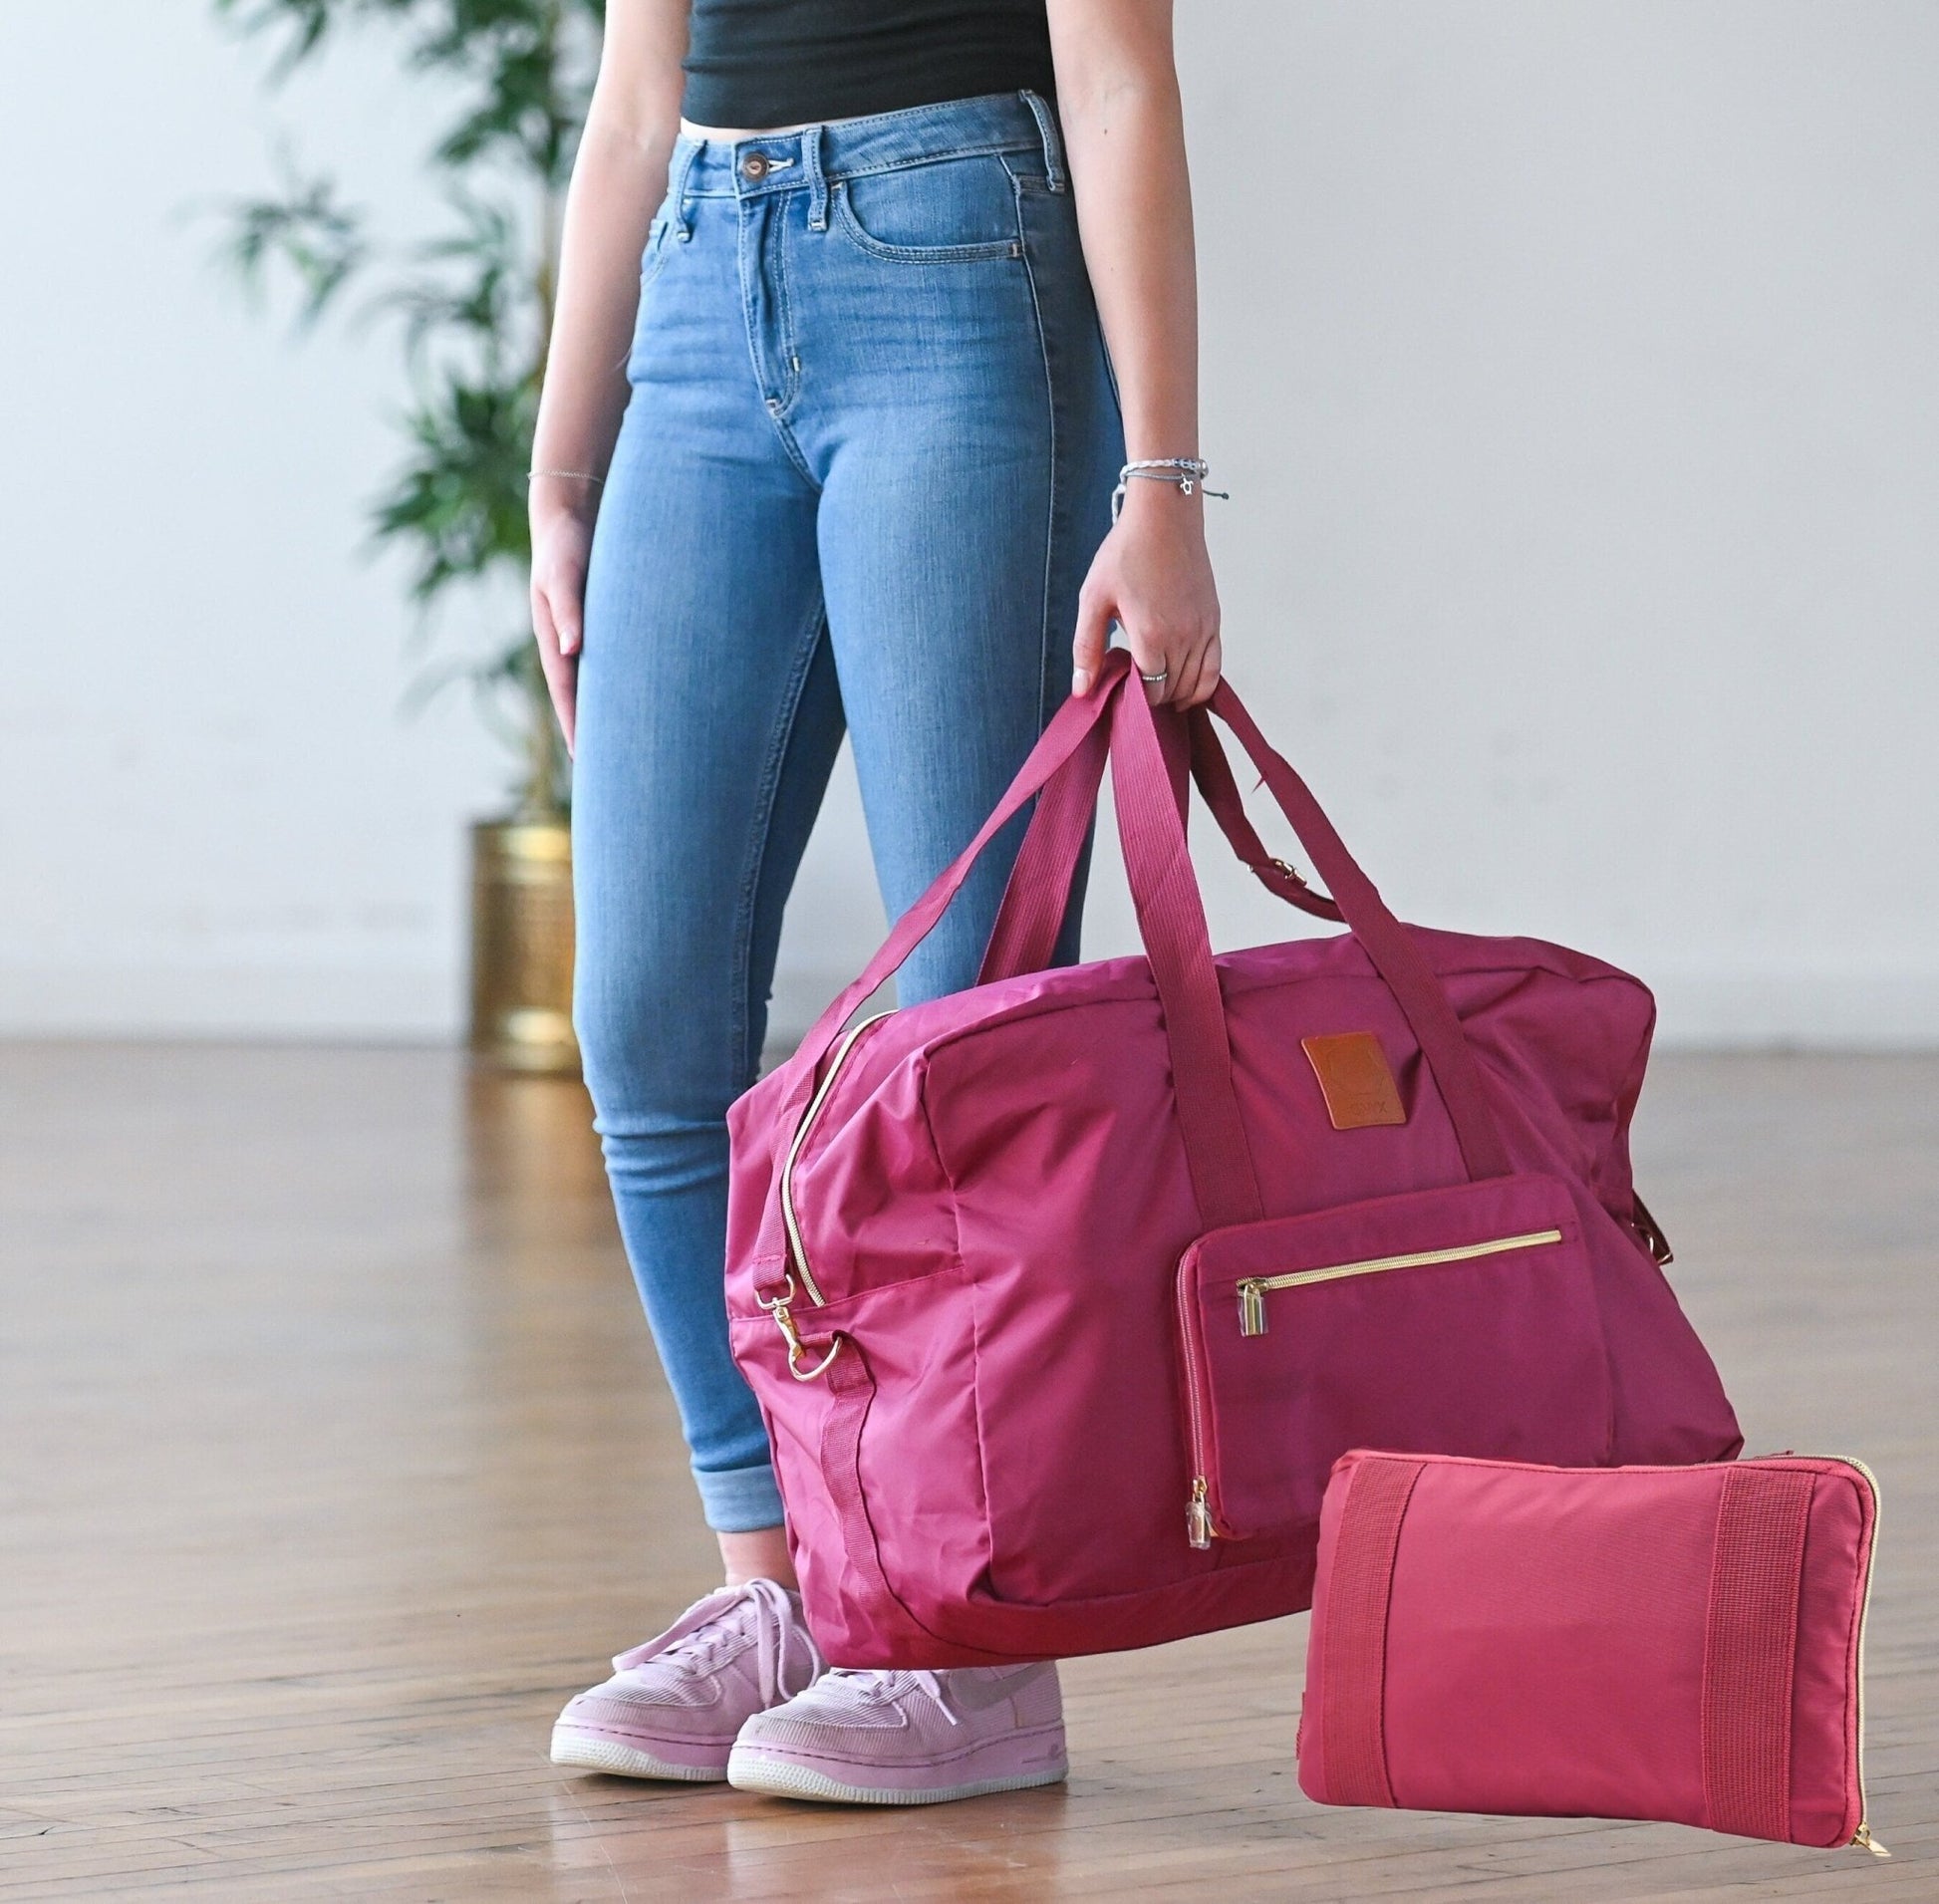 Foldable collapsible weekender bag women, travel bag, sports bag, hand luggage, handbag for sports and travel, weekend bag